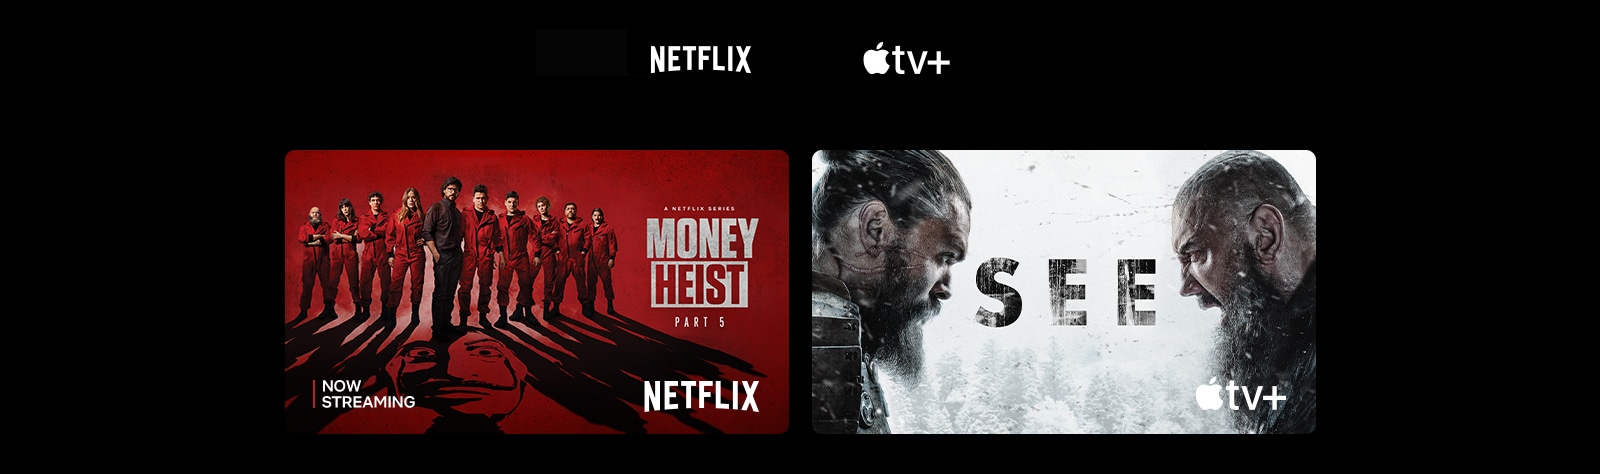 Постеры "Money Heist" от Netflix и "See" от Apple TV Plus.